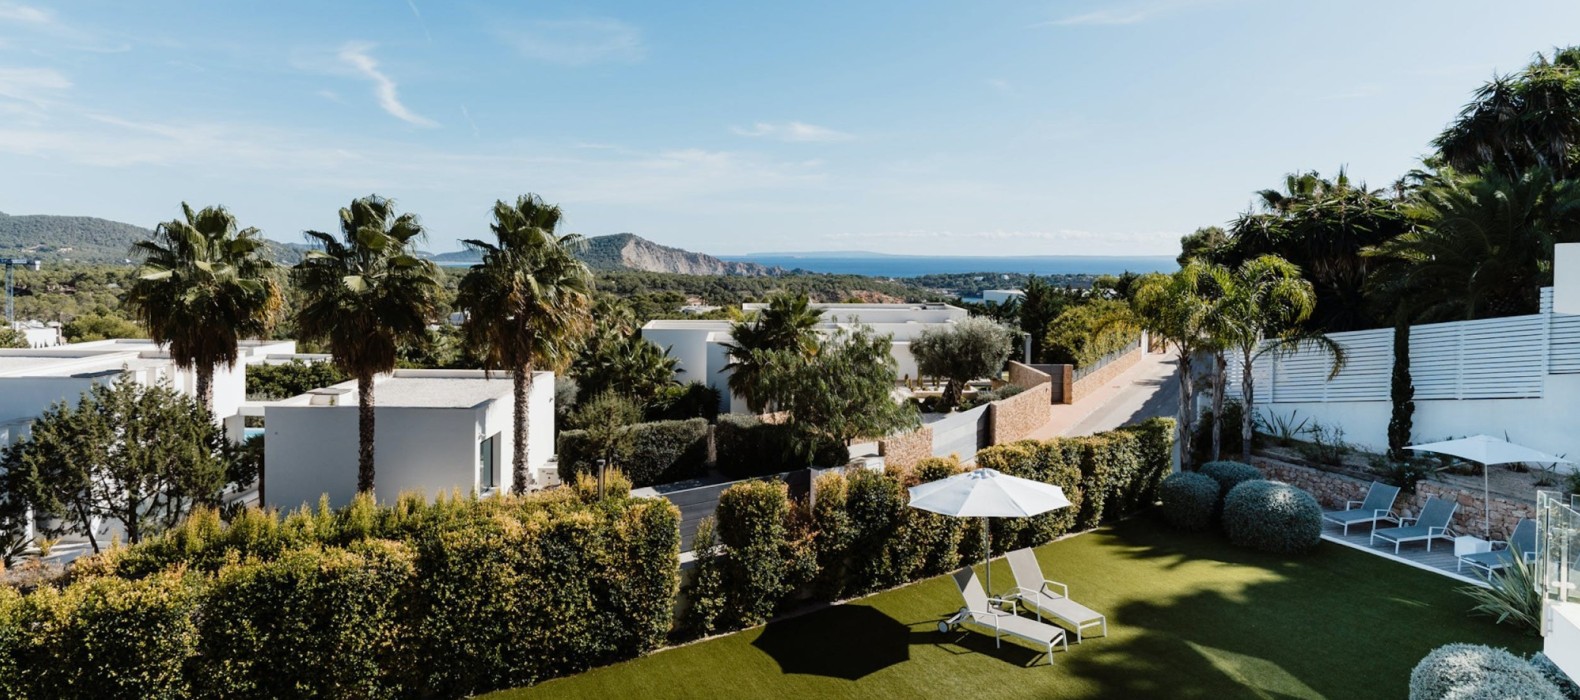 Sea view of Villa Amaya in Ibiza